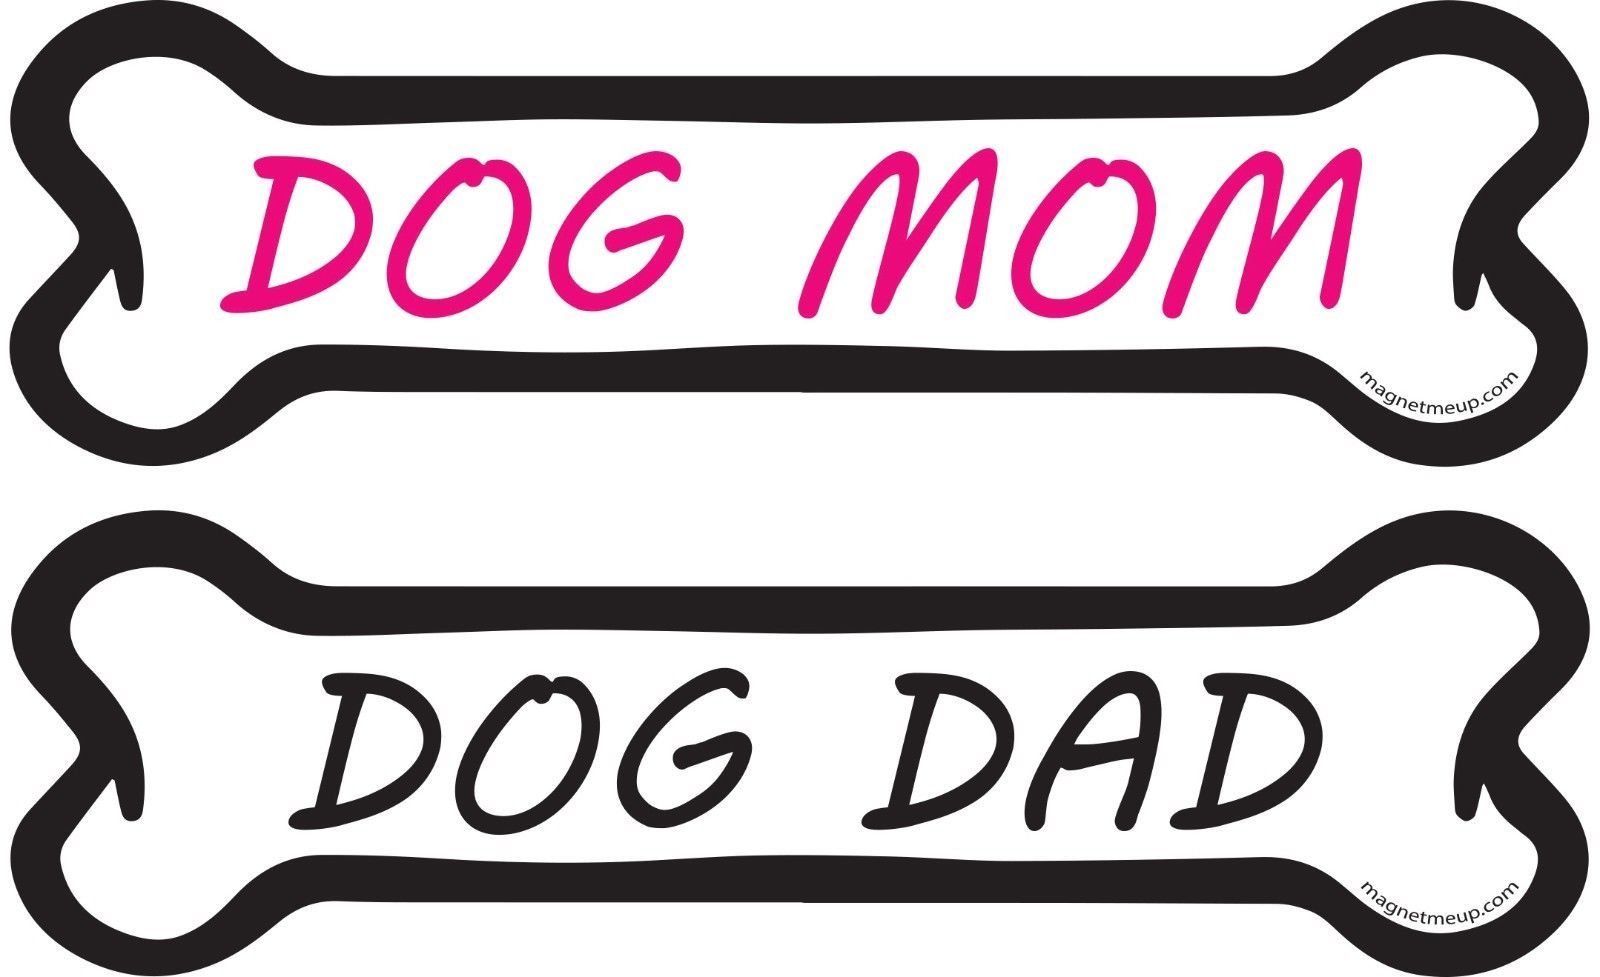 Dog Bone Car Magnet - Dog Mom and Dog Dad Set - $9.99